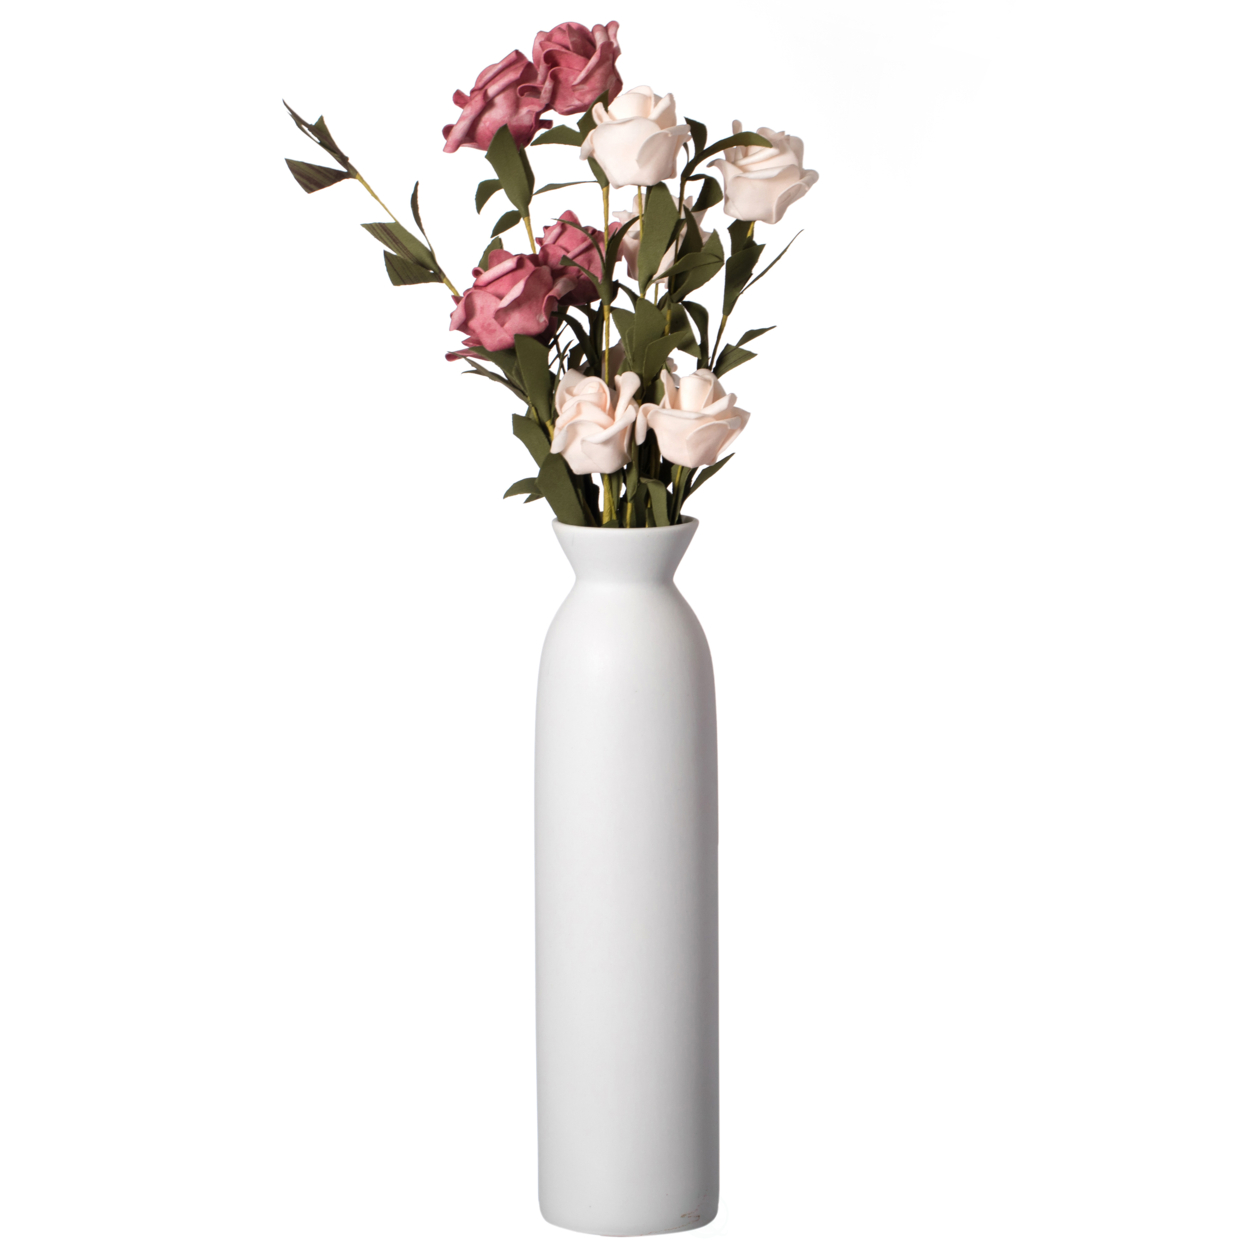 Contemporary White Cylinder Shaped Ceramic Table Flower Vase Holder - Set Of 3